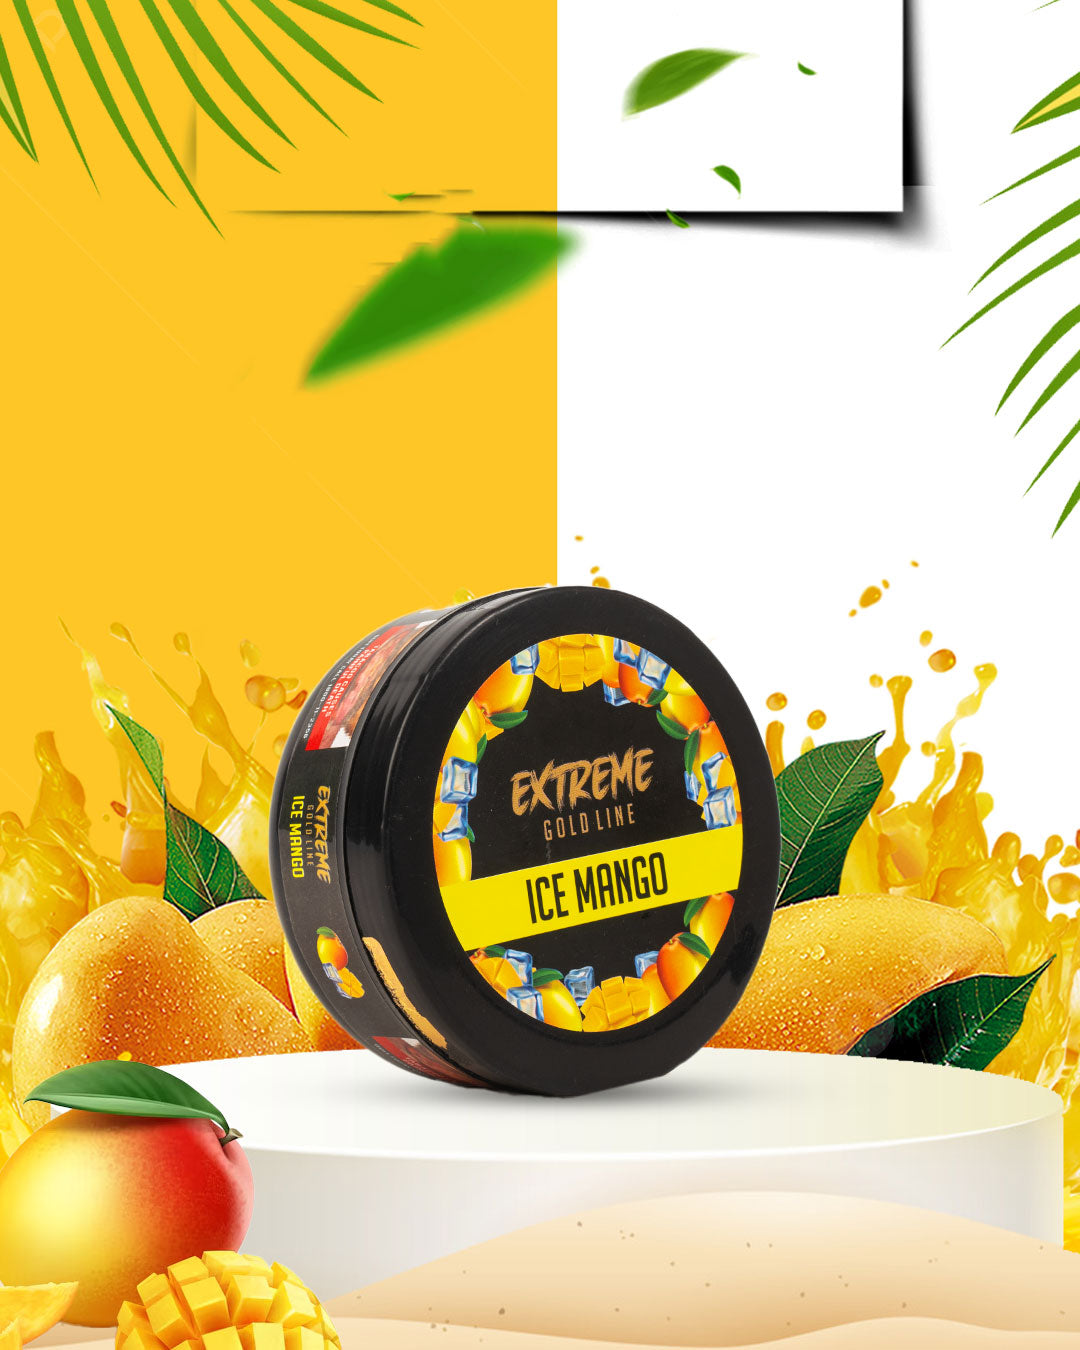 Extreme Gold Line Ice Mango Hookah Flavor - 100g Box